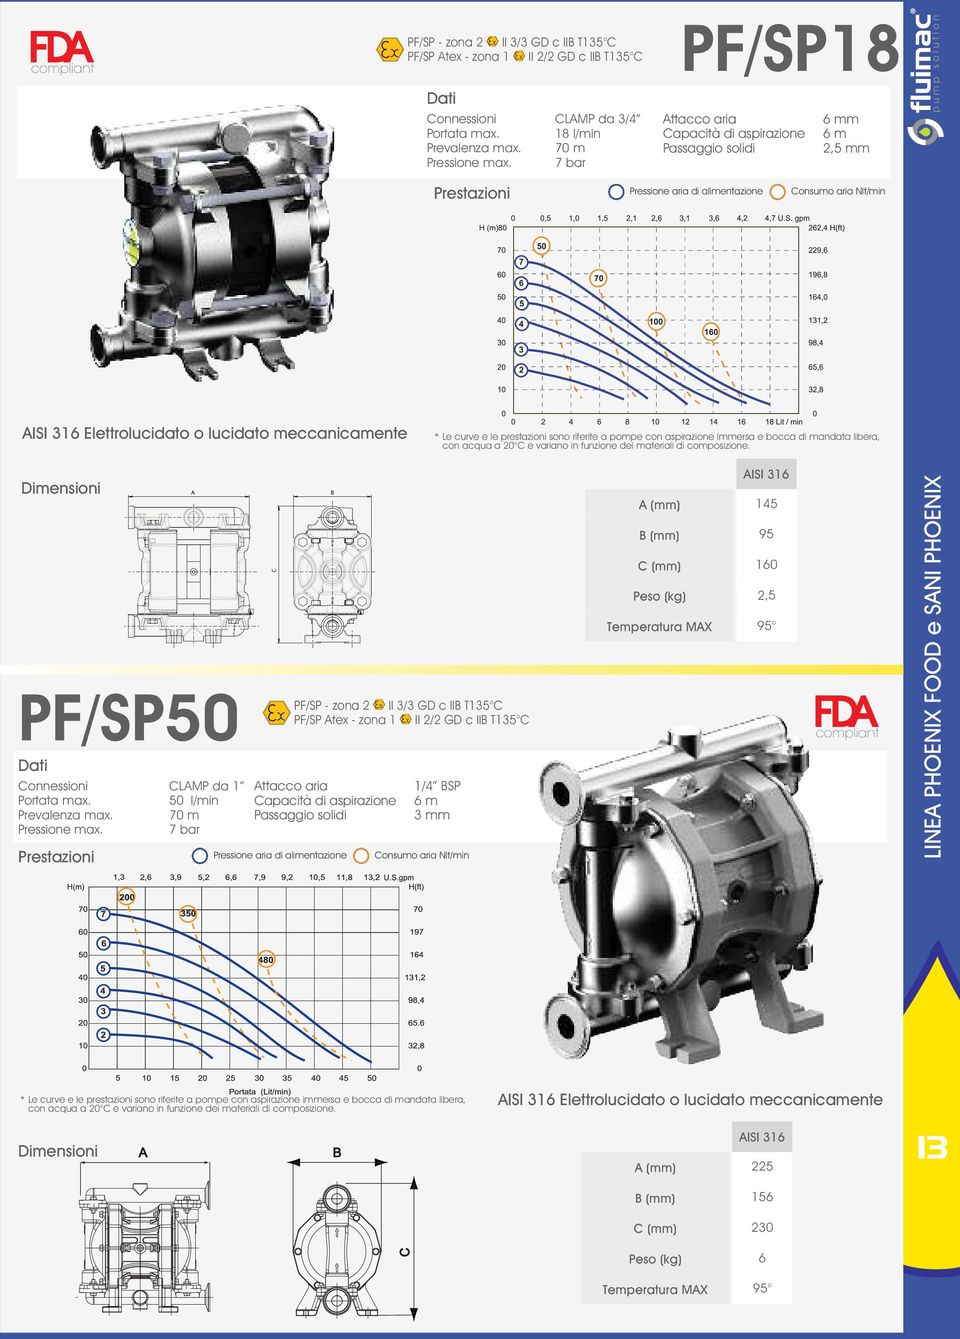 PF/SP tex - zona 1 II 2/2 GD c II T135 LMP da 1 ttacco aria 50 l/min apacità di aspirazione onsumo aria Nlt/min PF/SP50